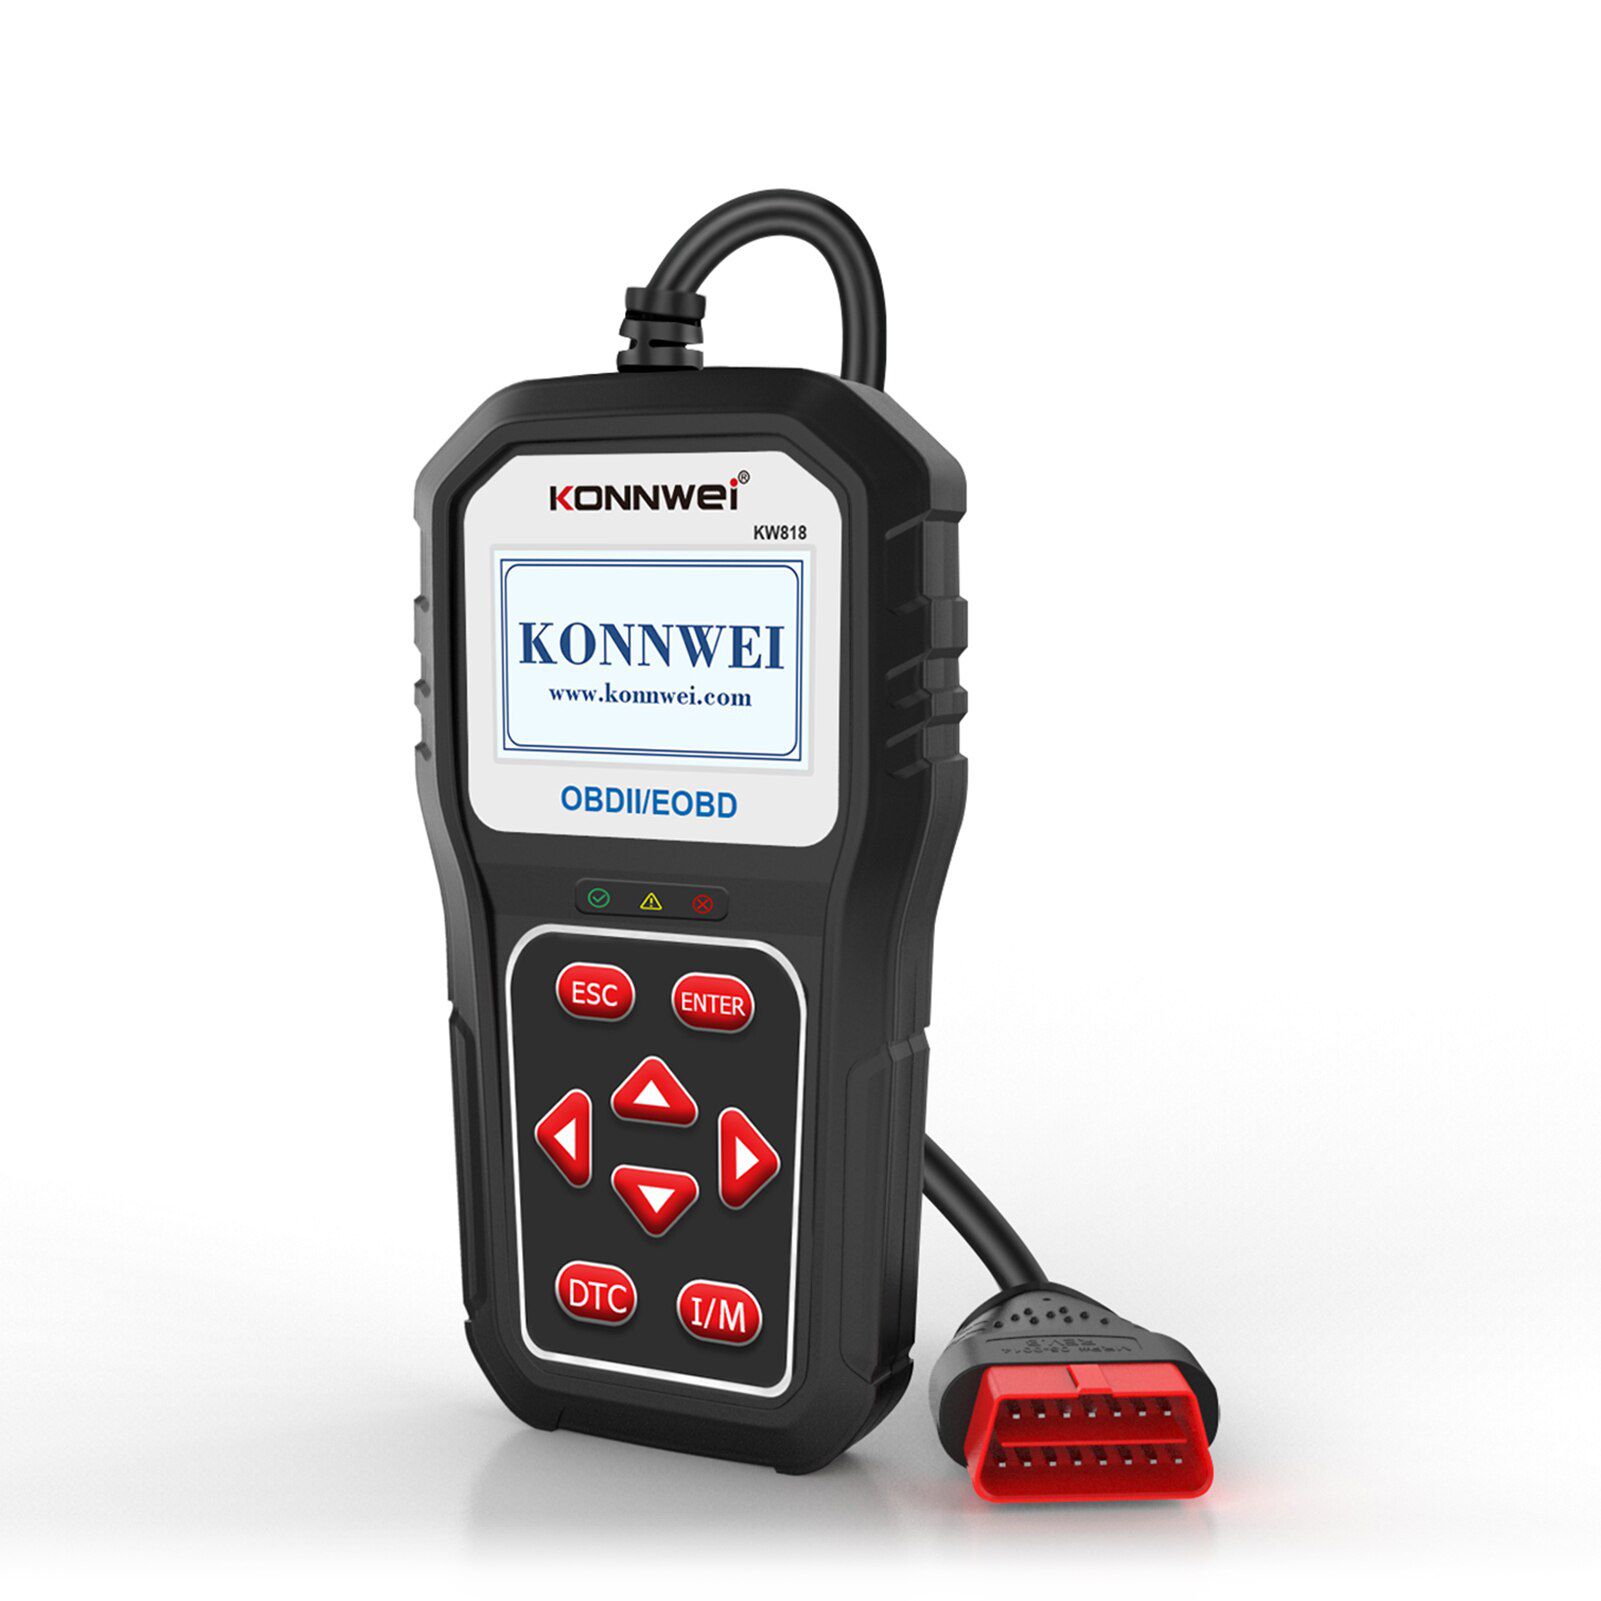 KONNWEI KW818 OBD2 Scaner Car Diagnostic Tool